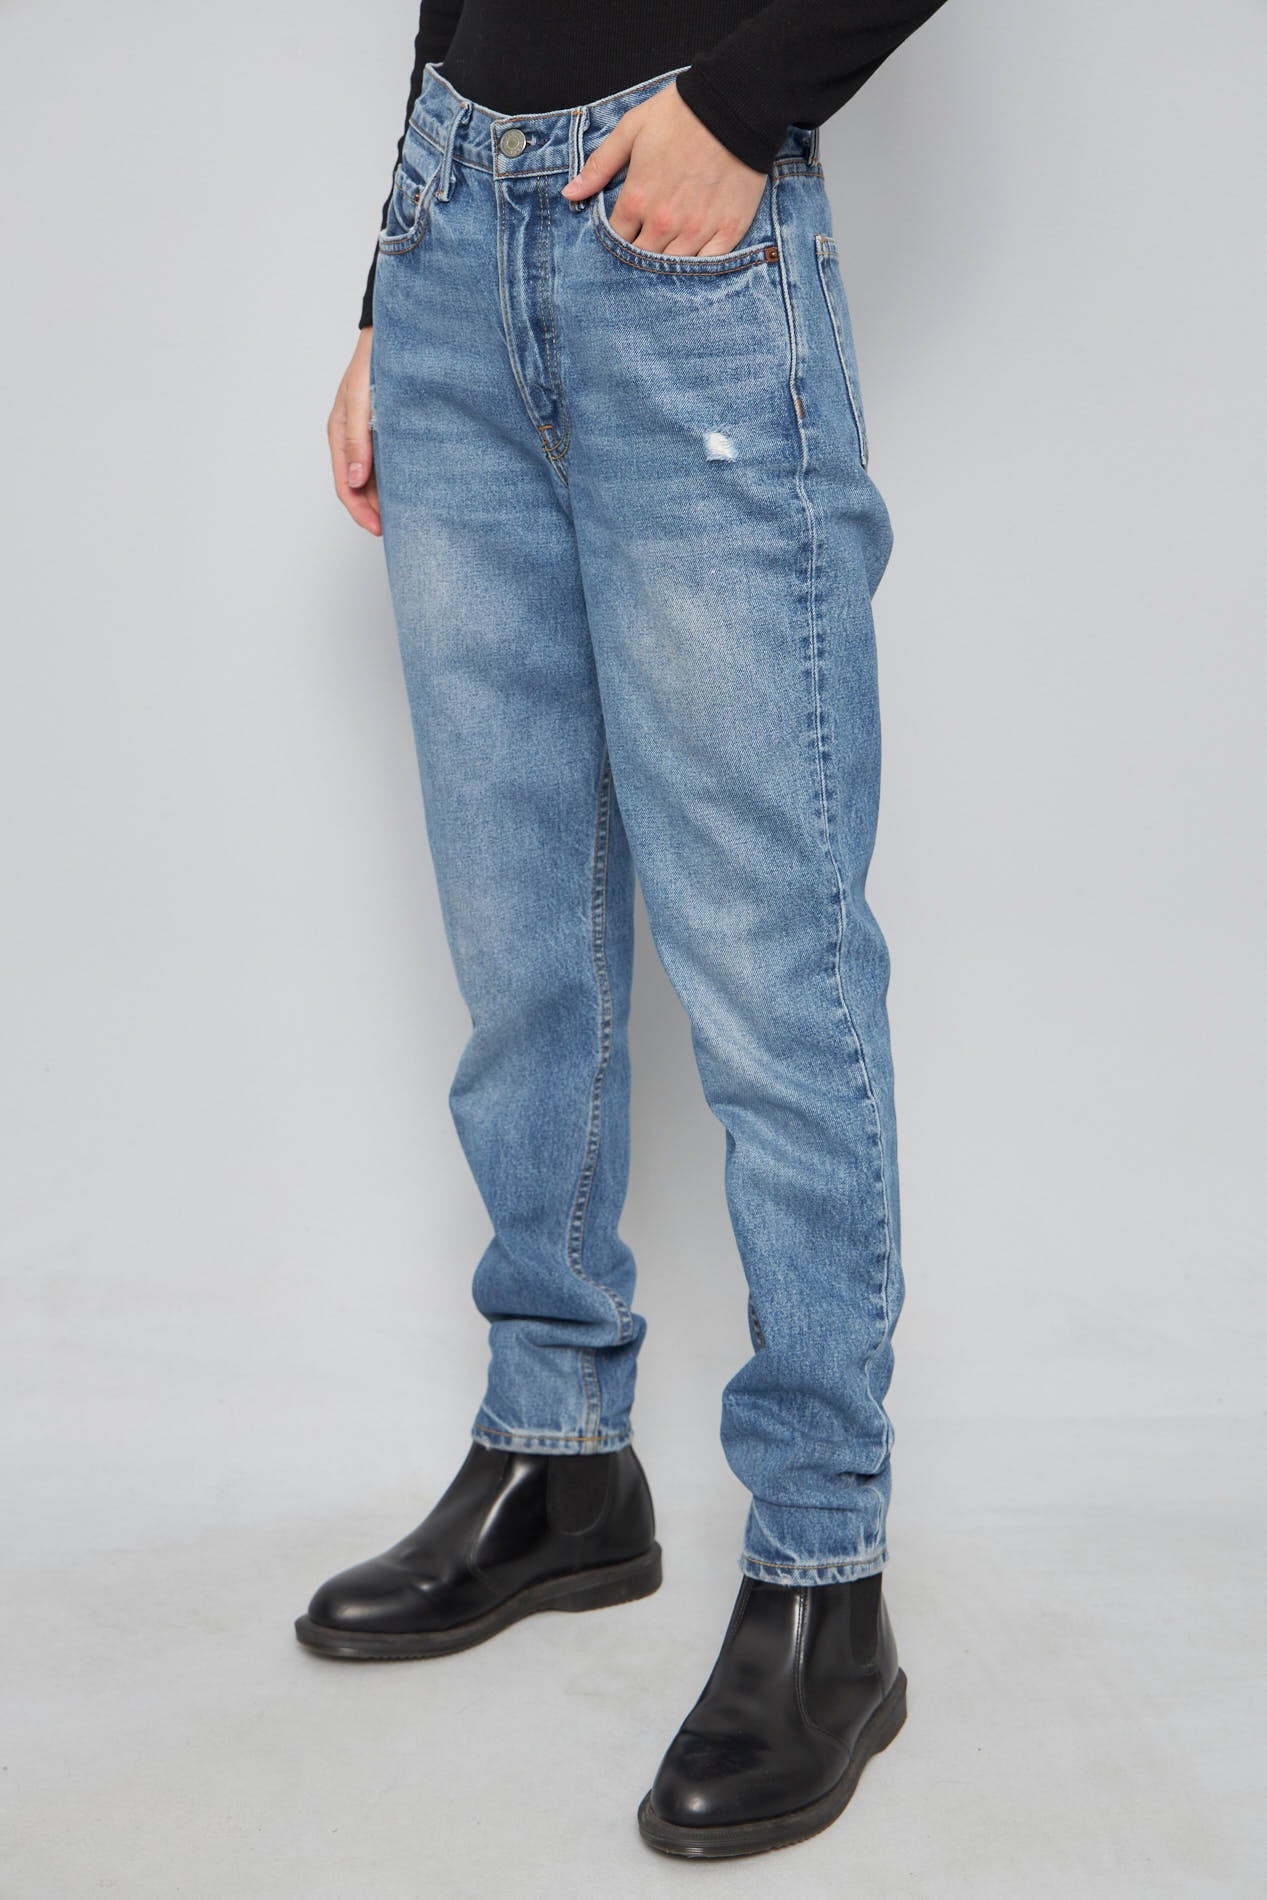 Jeans casual  azul grlfrnd talla 36 836